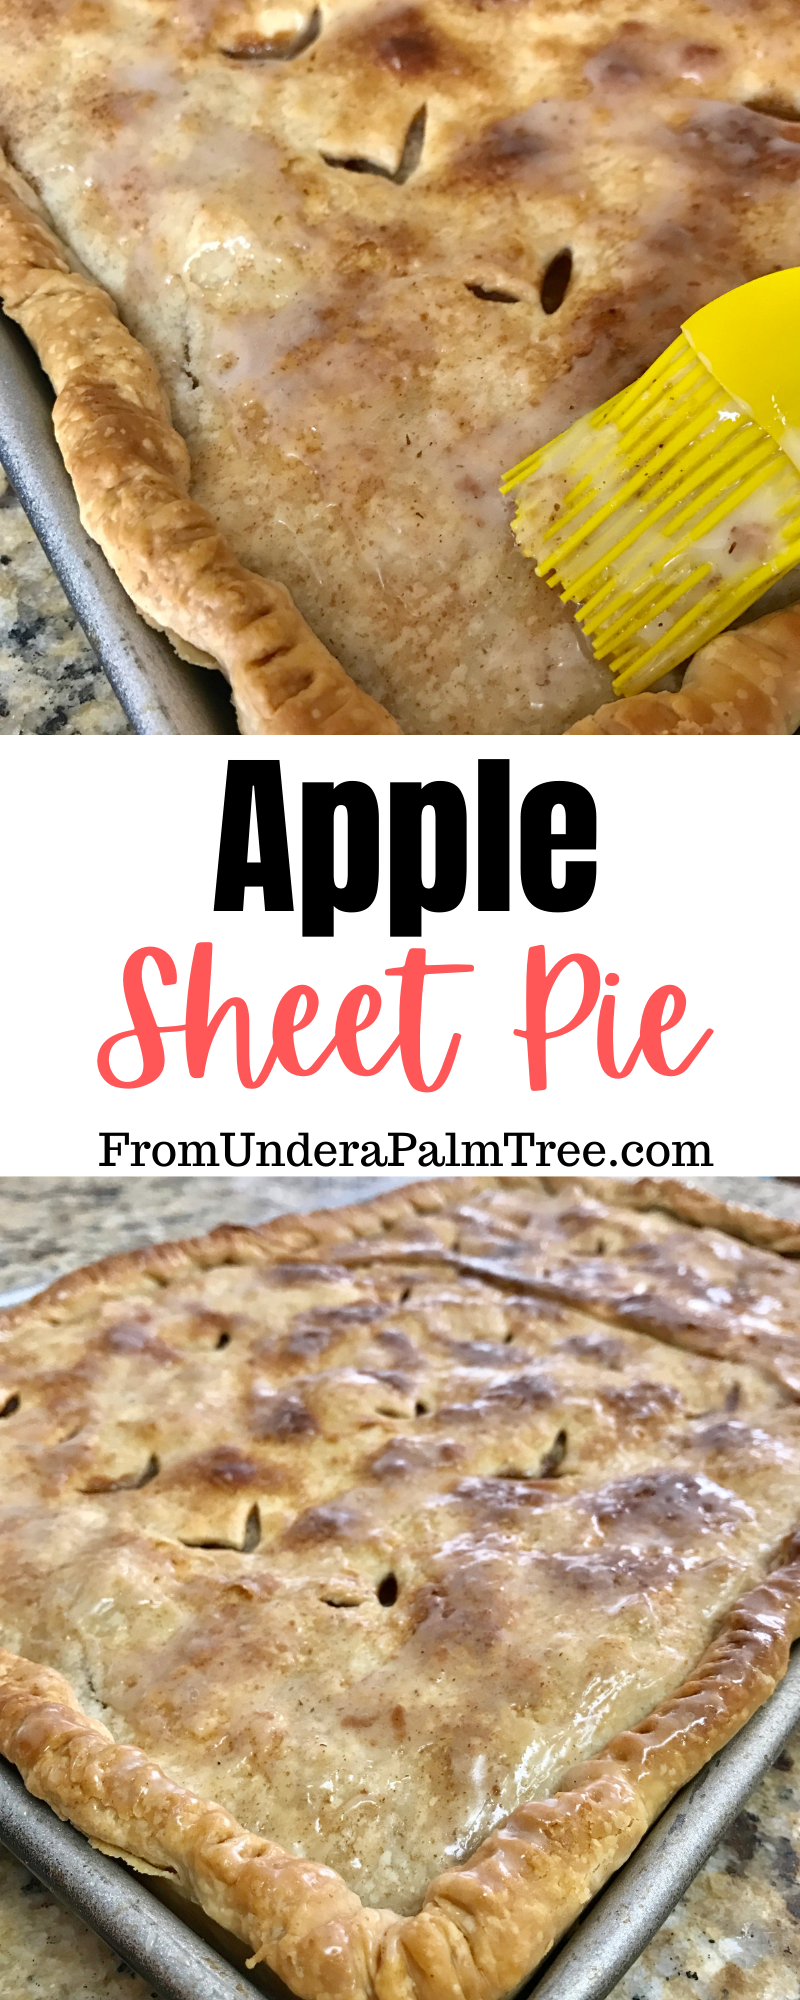 apple pie recipe | apple sheet pie | how to make apple pie | easy apple pie recipe | thanksgiving desserts | apples | pie recipe | easy crust apple pie | dessert recipe | best apple pie recipe | thanksgiving sides | 